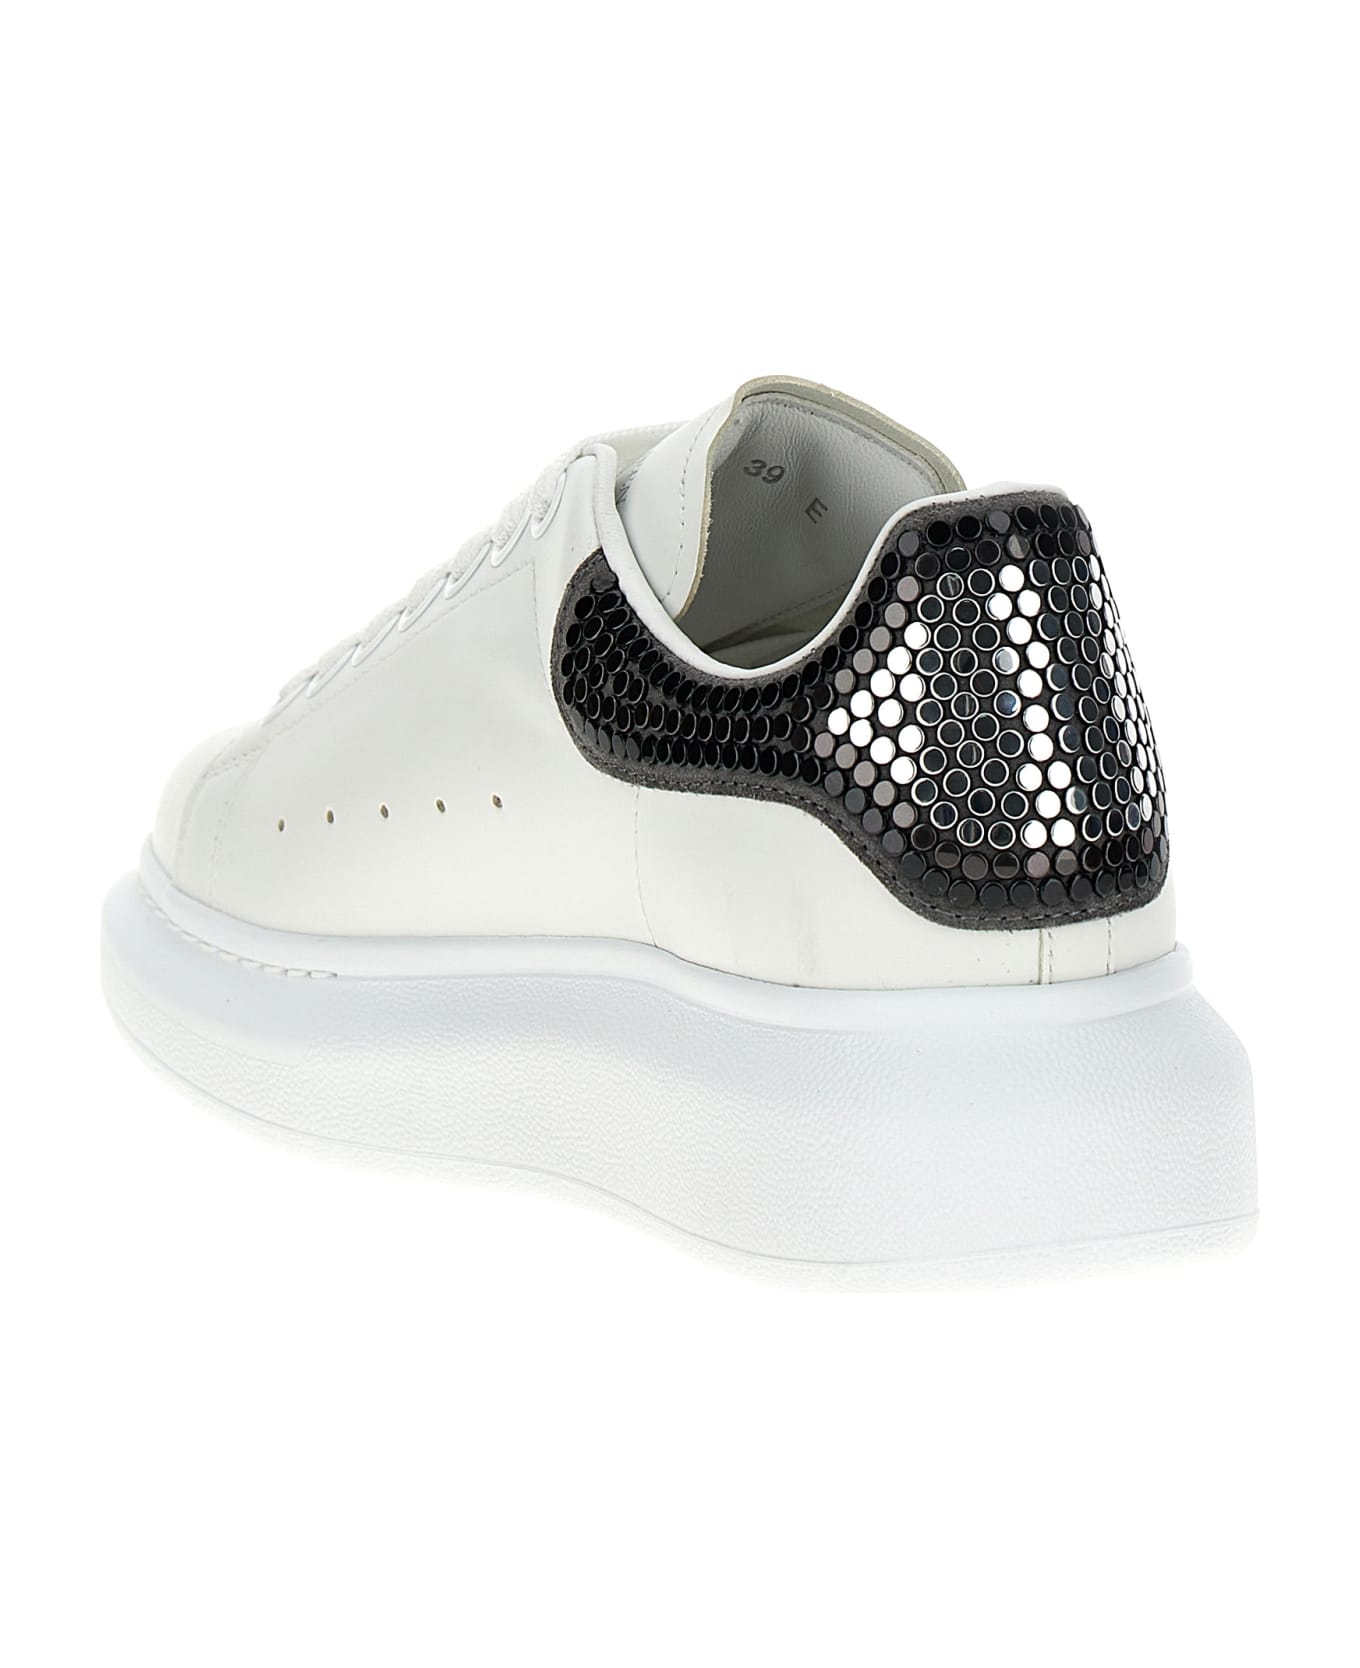 Alexander McQueen Larry Sneakers - White/Black スニーカー